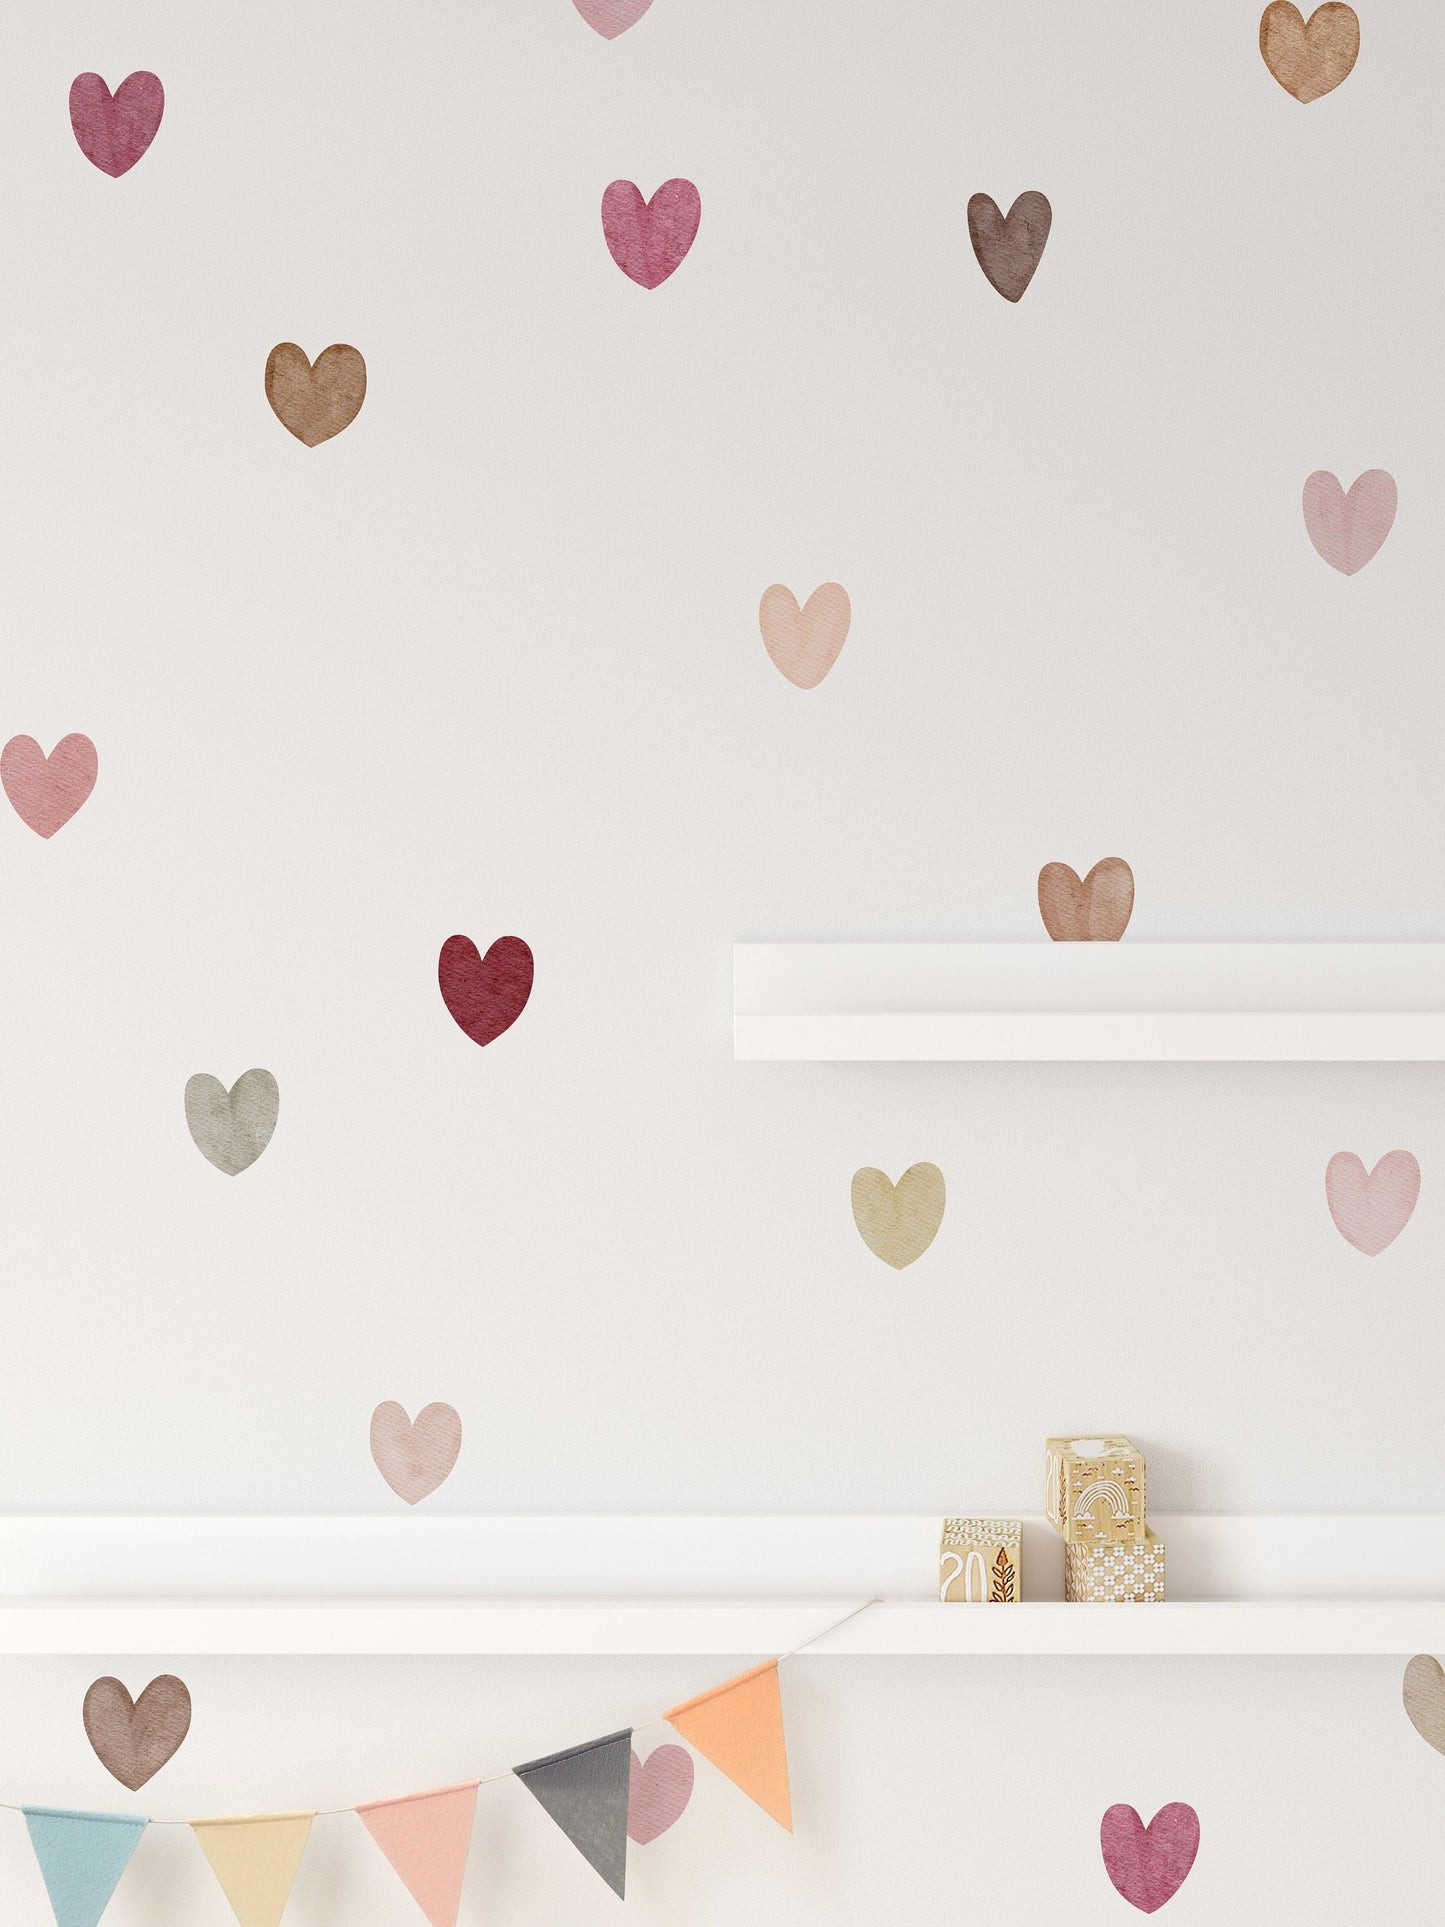 Rustic Heart Kids Nursery Boho Wall Stickers Decals